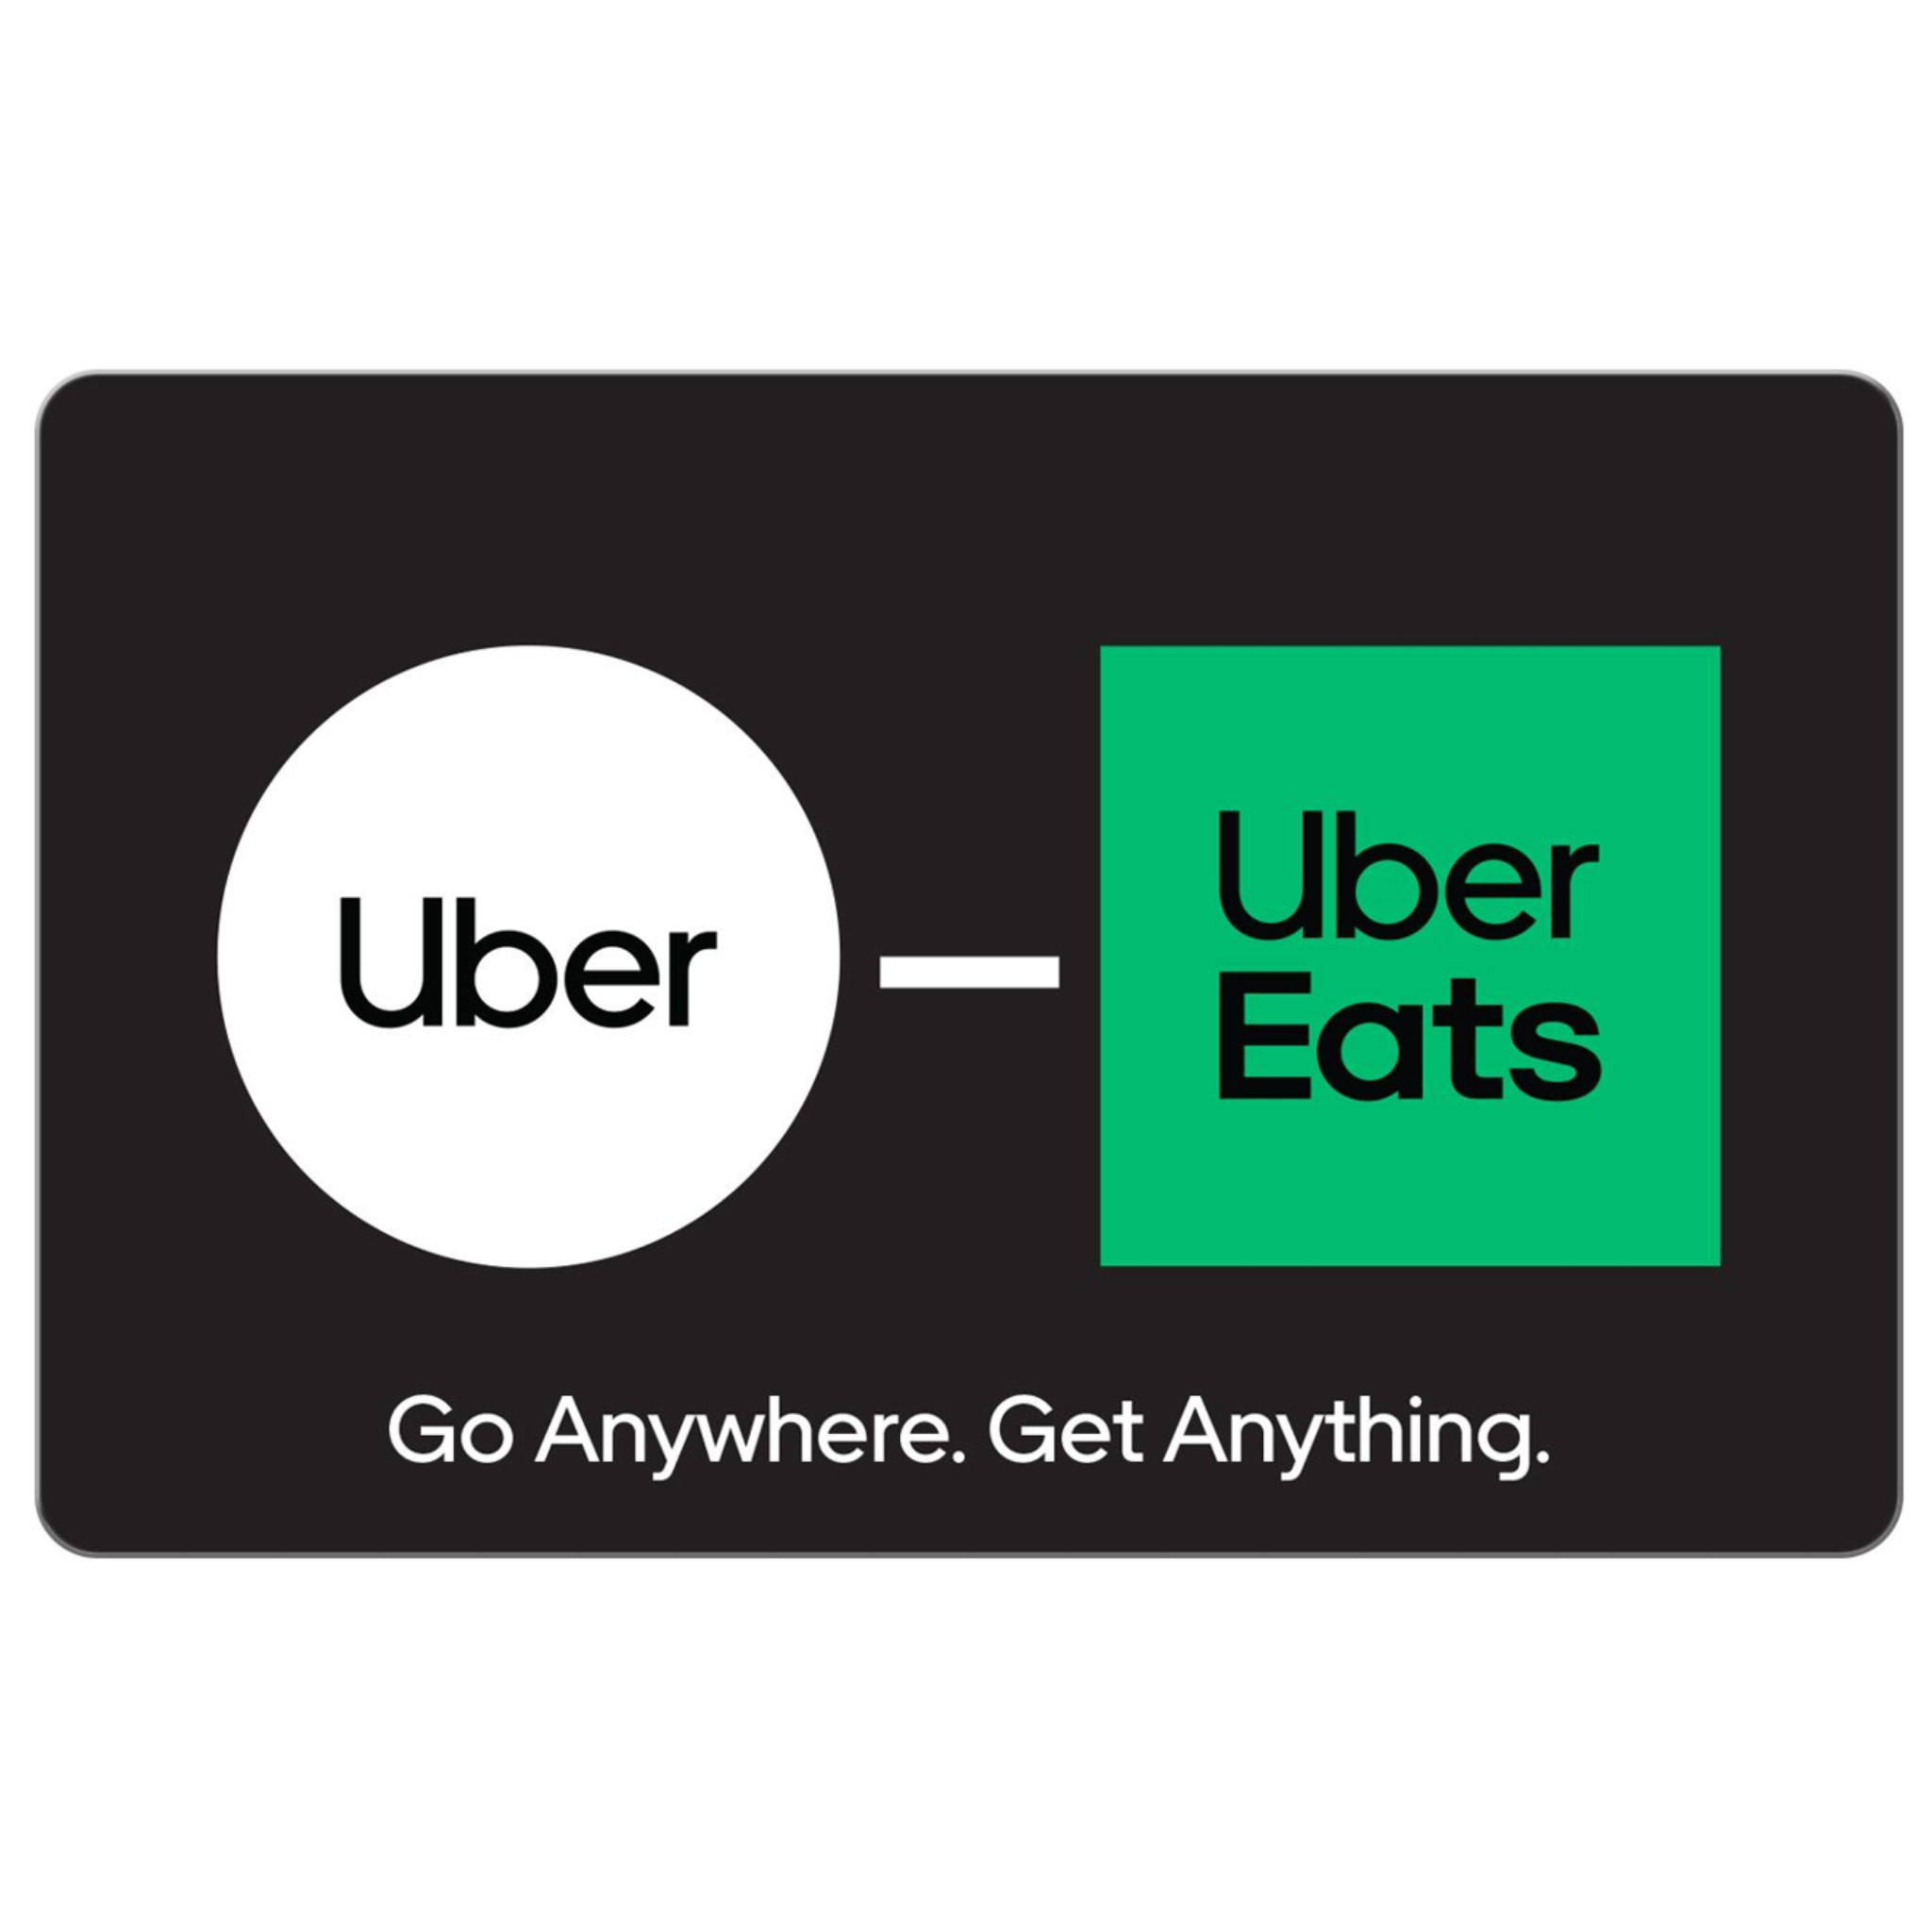 $100 Uber Eats/Uber Gift Cards